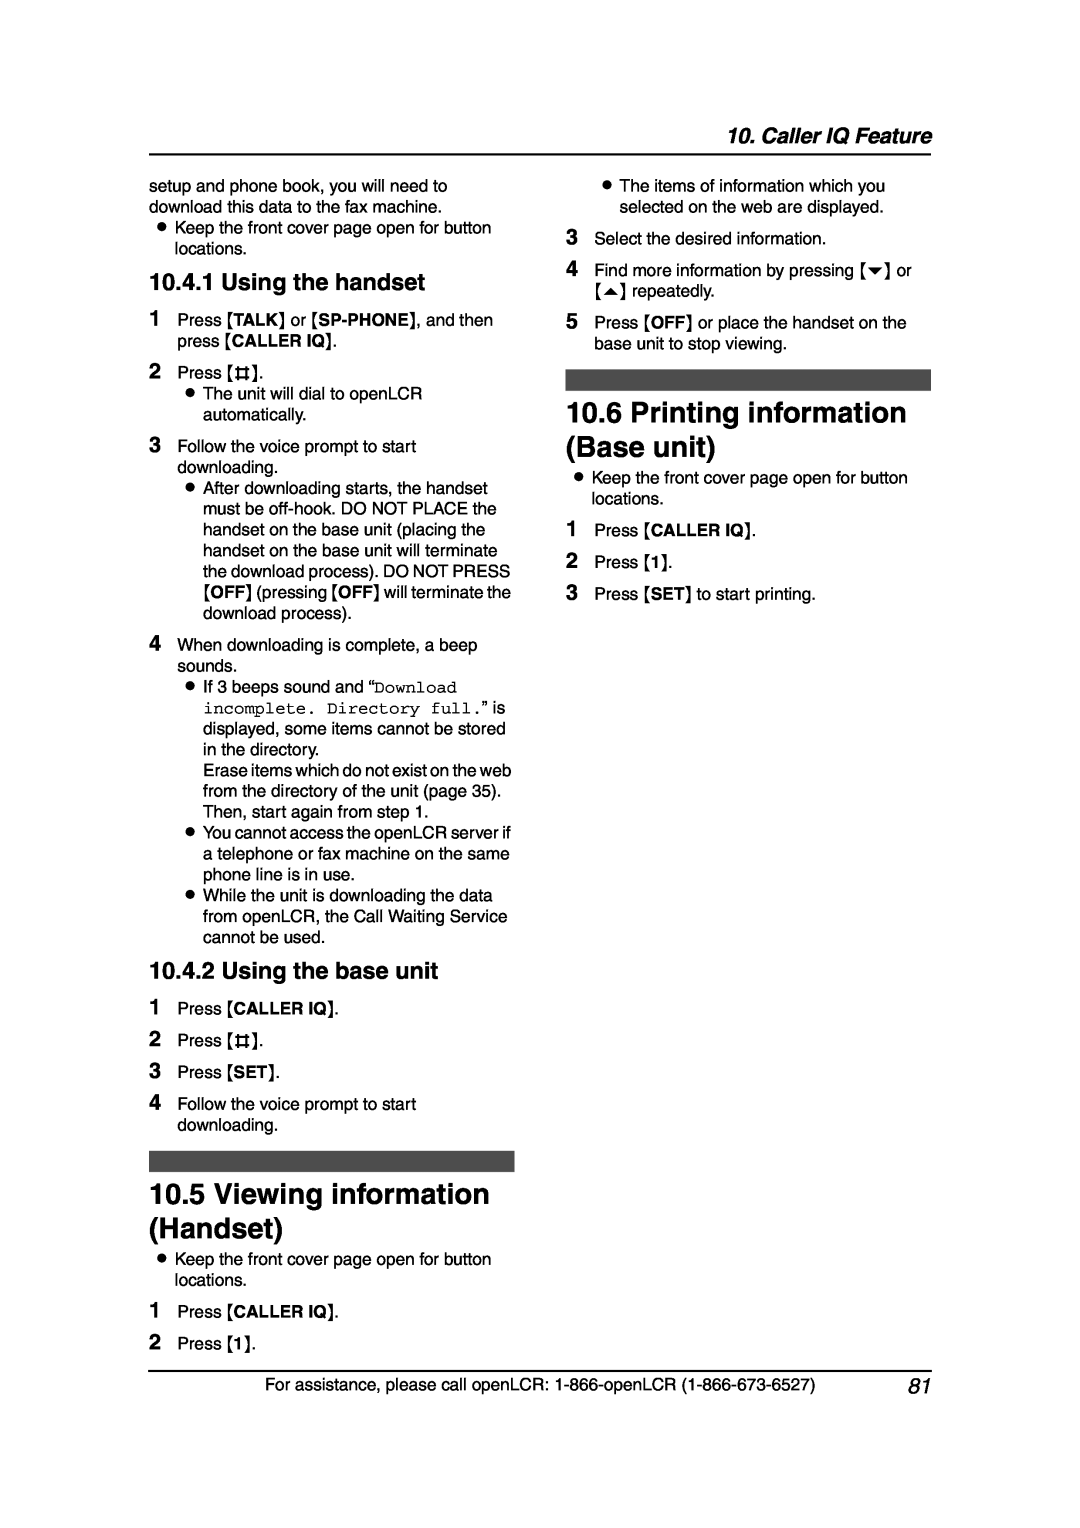 Panasonic KX-FPG377 Printing information Base unit, Viewing information Handset, Using the handset, Using the base unit 